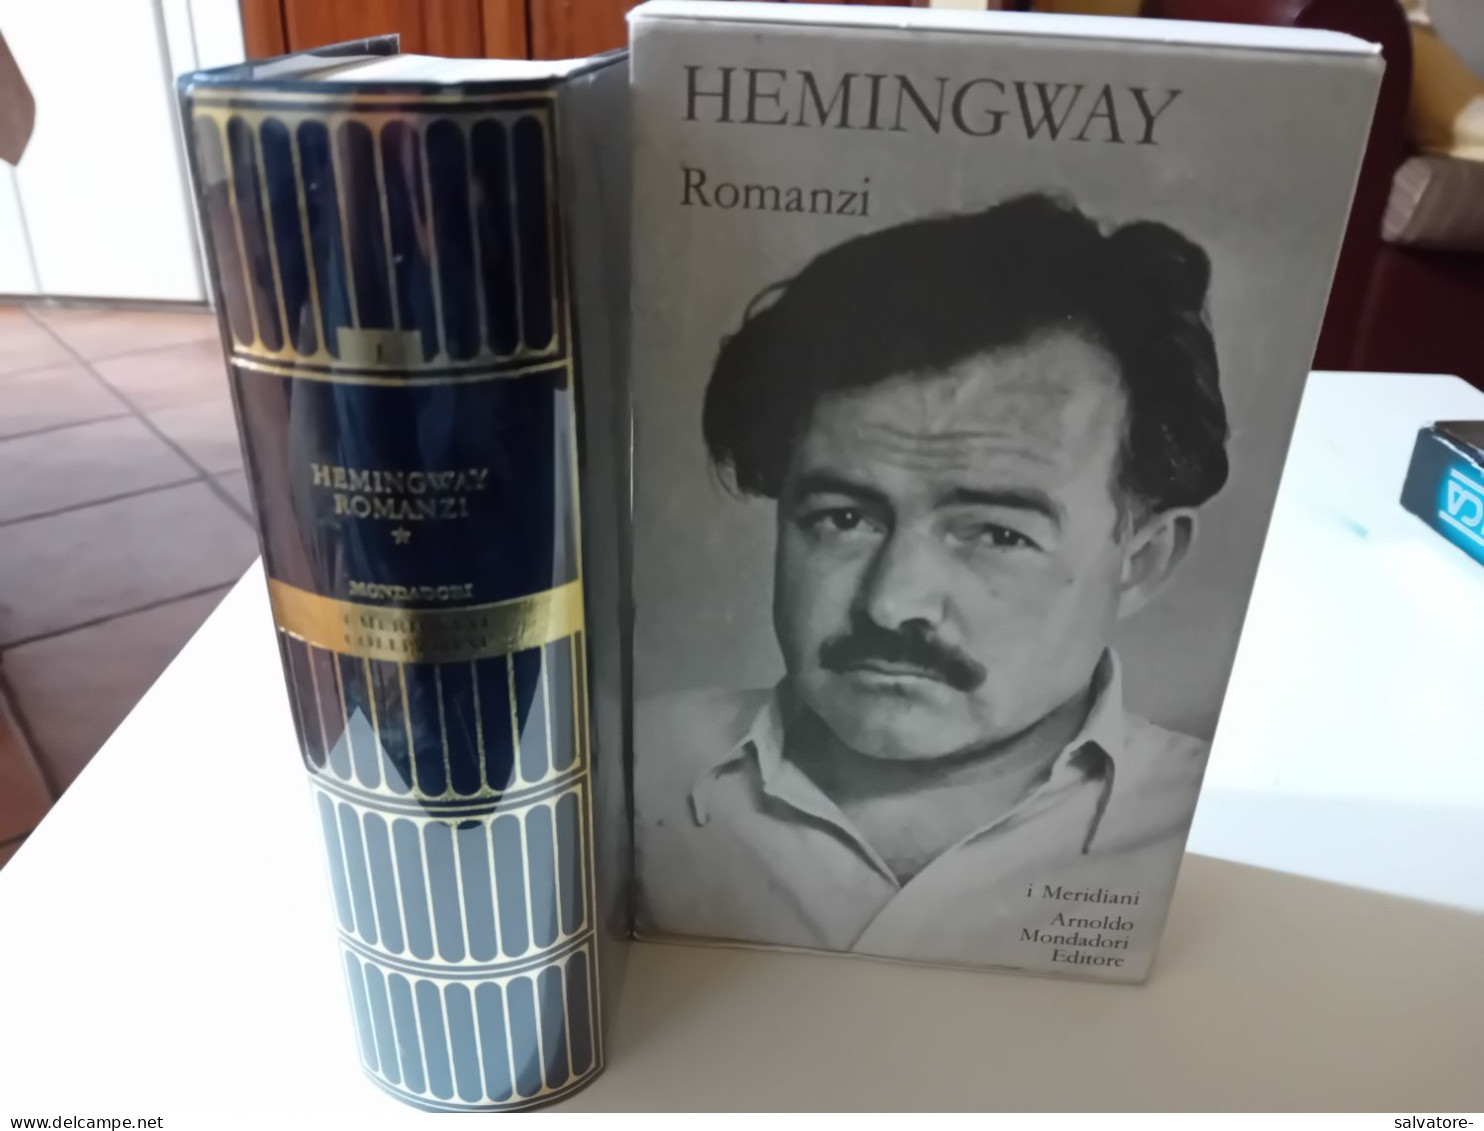 HEMINGWAY - ROMANZI- I MERIDIANI MONDADORI EDITORE - VOLUME PRIMO - Grandi Autori